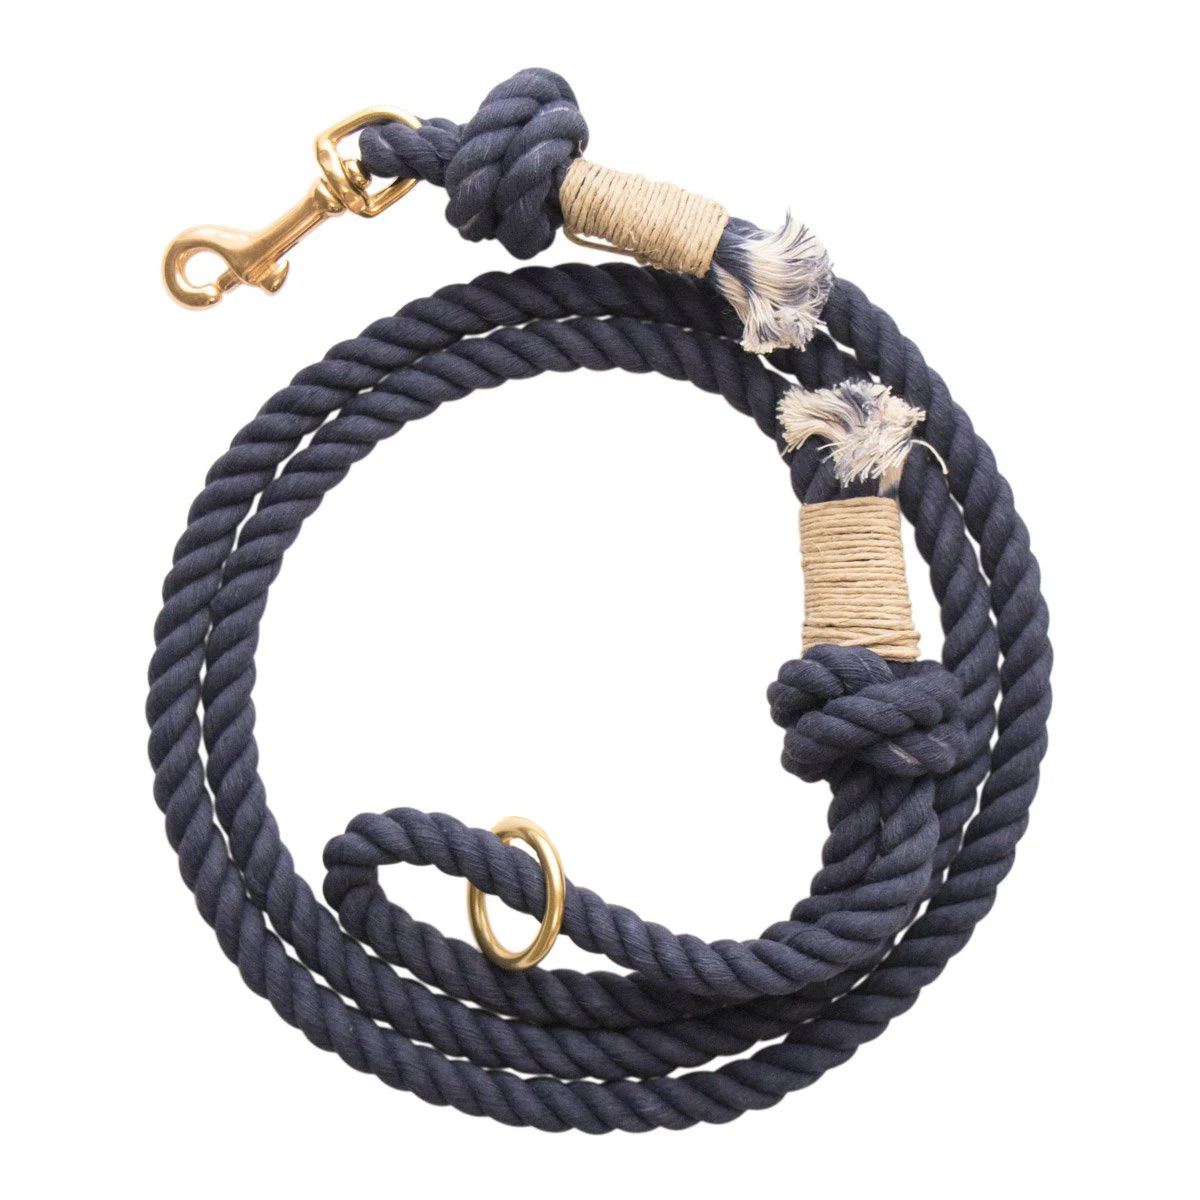 Dog Rope Leashes Black Cotton for Medium or Large Breeds